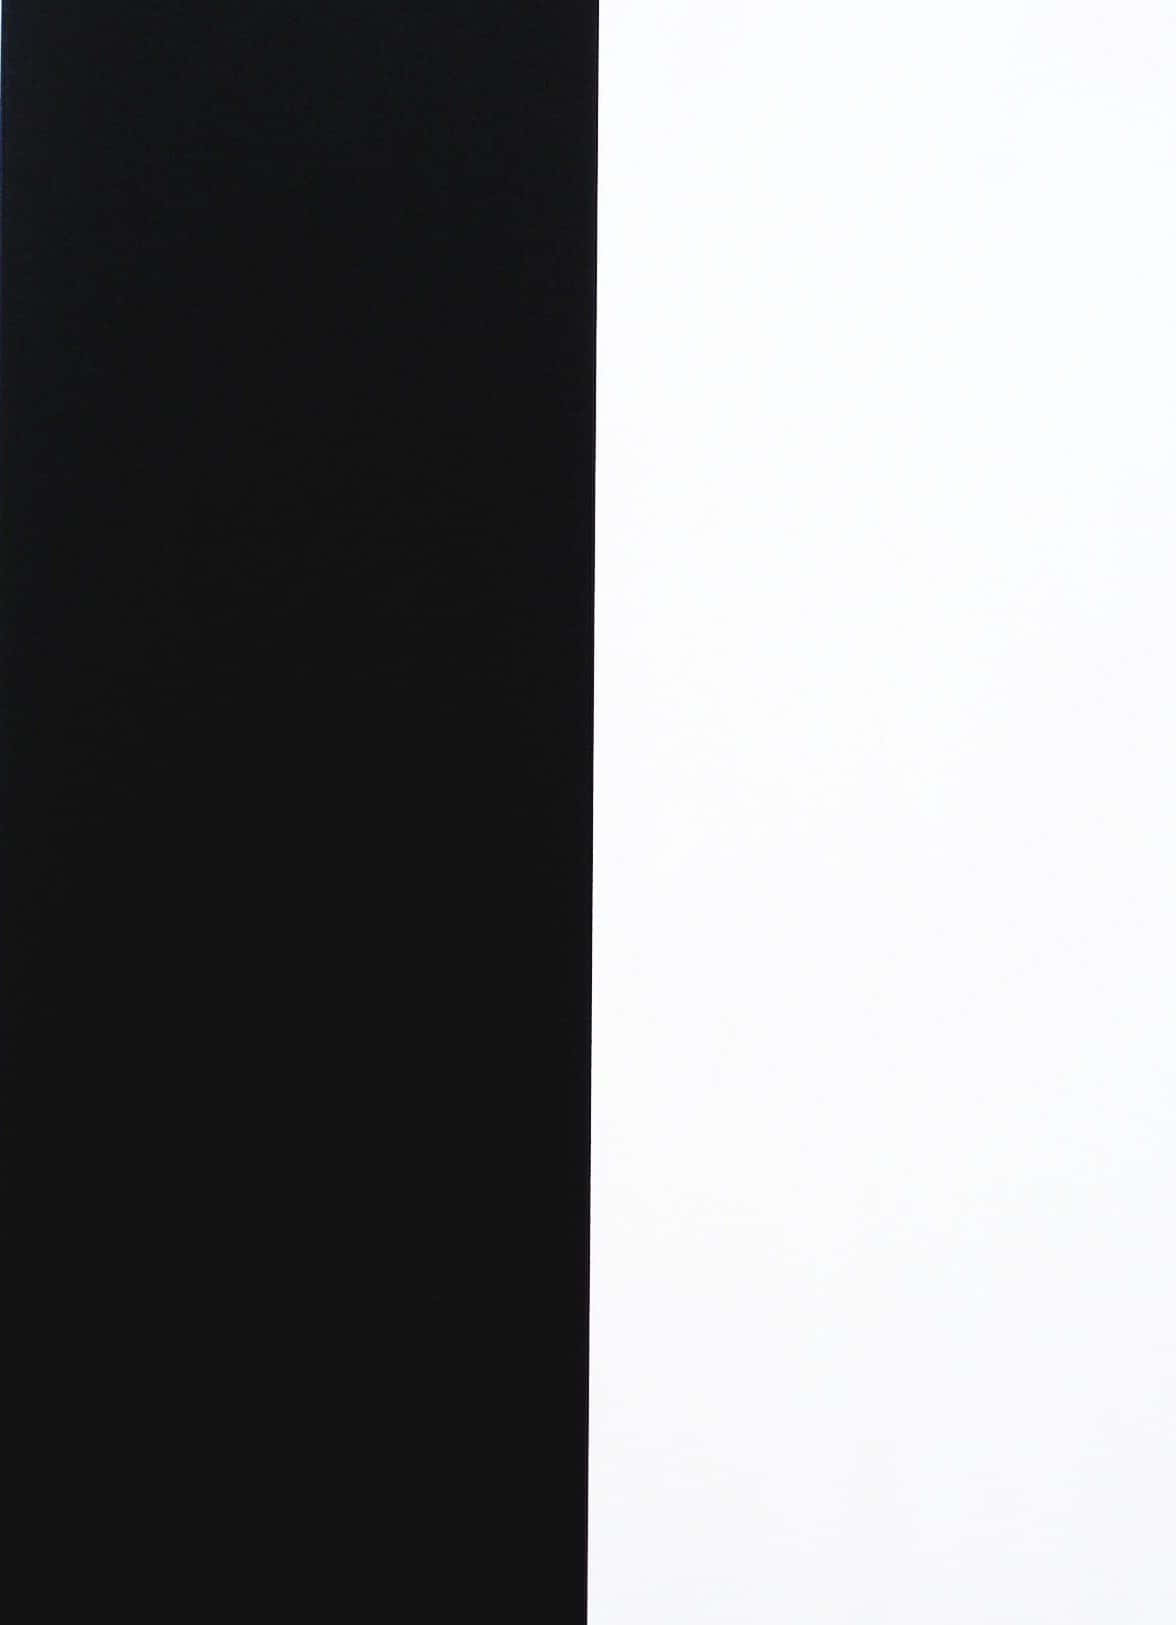 Download Half Black Half White 1176 X 1625 Wallpaper Wallpaper